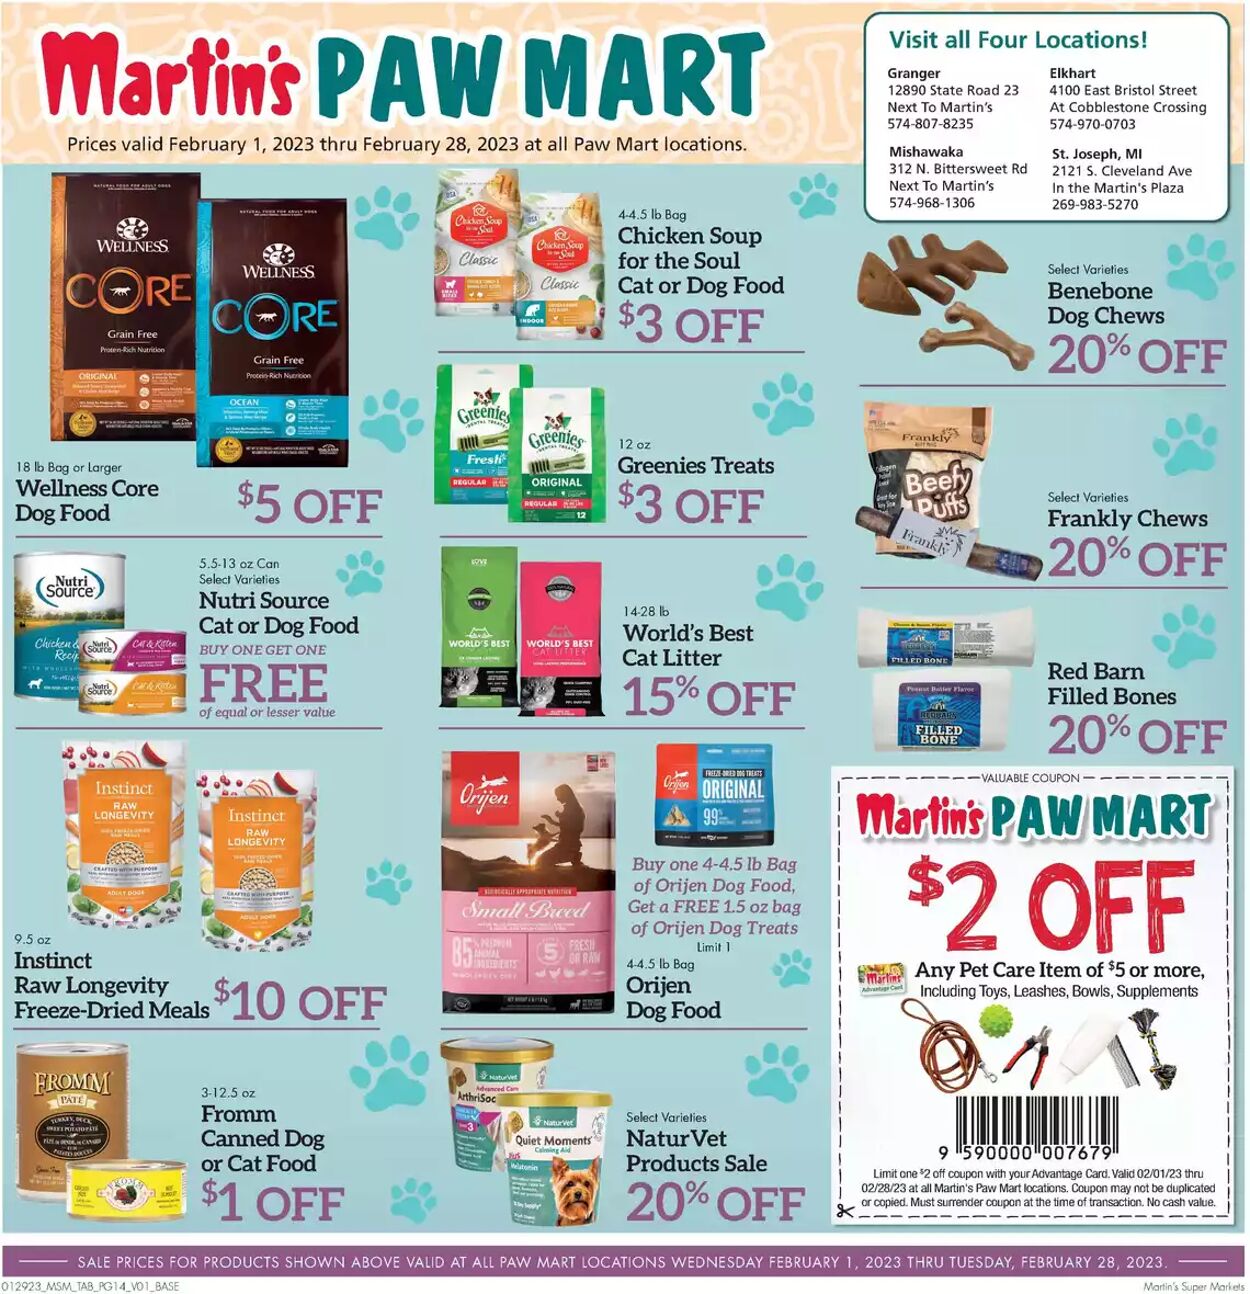 Weekly ad Martin's Supermarkets 01/29/2023 - 02/04/2023